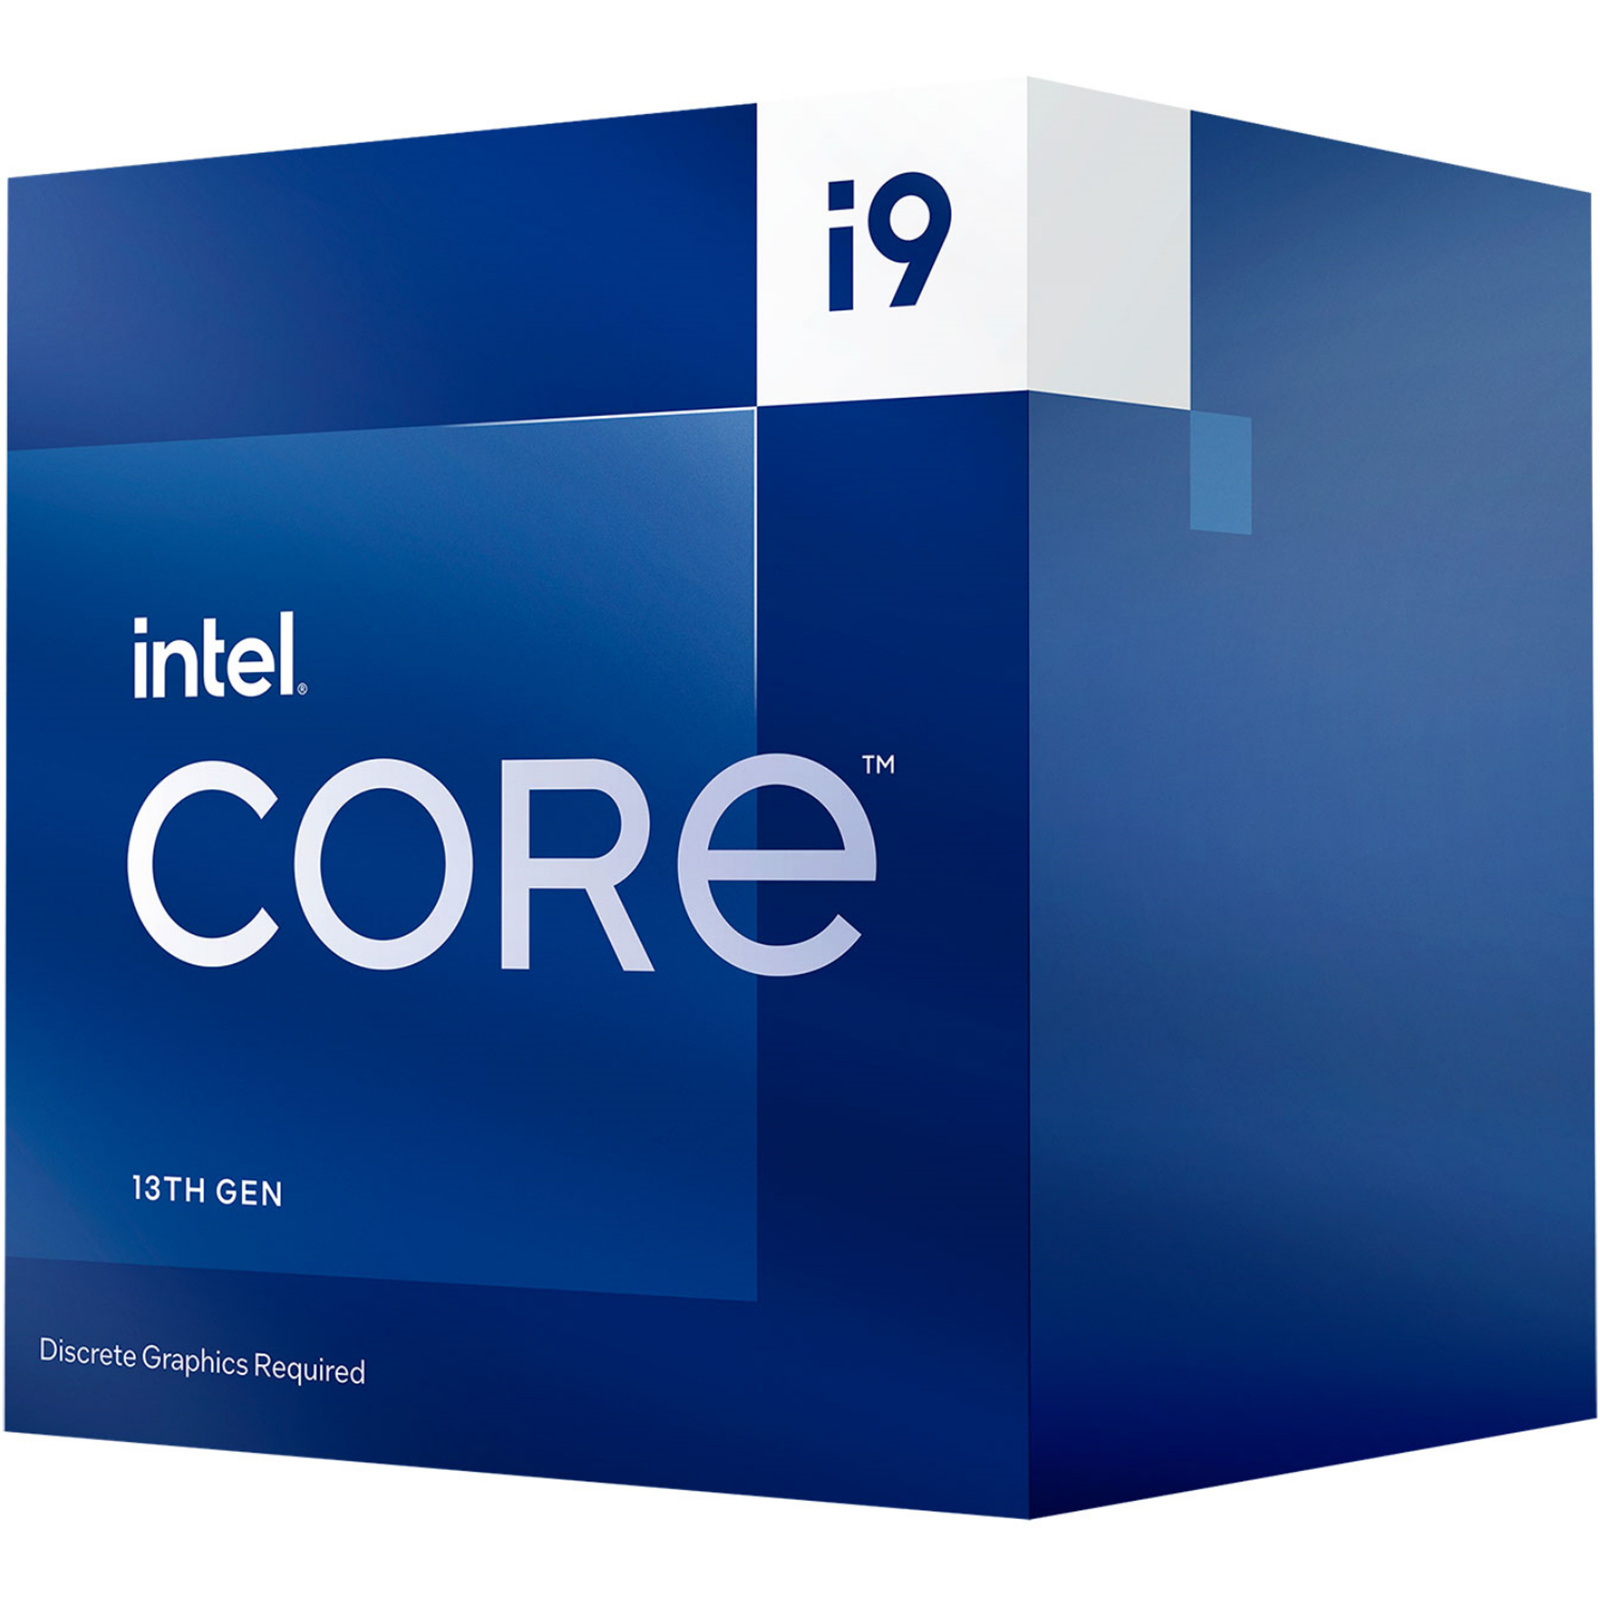 Intel Core i9-13900K CPU - 3 GHz 24-Core LGA 1700 Processor - BX8071513900K  